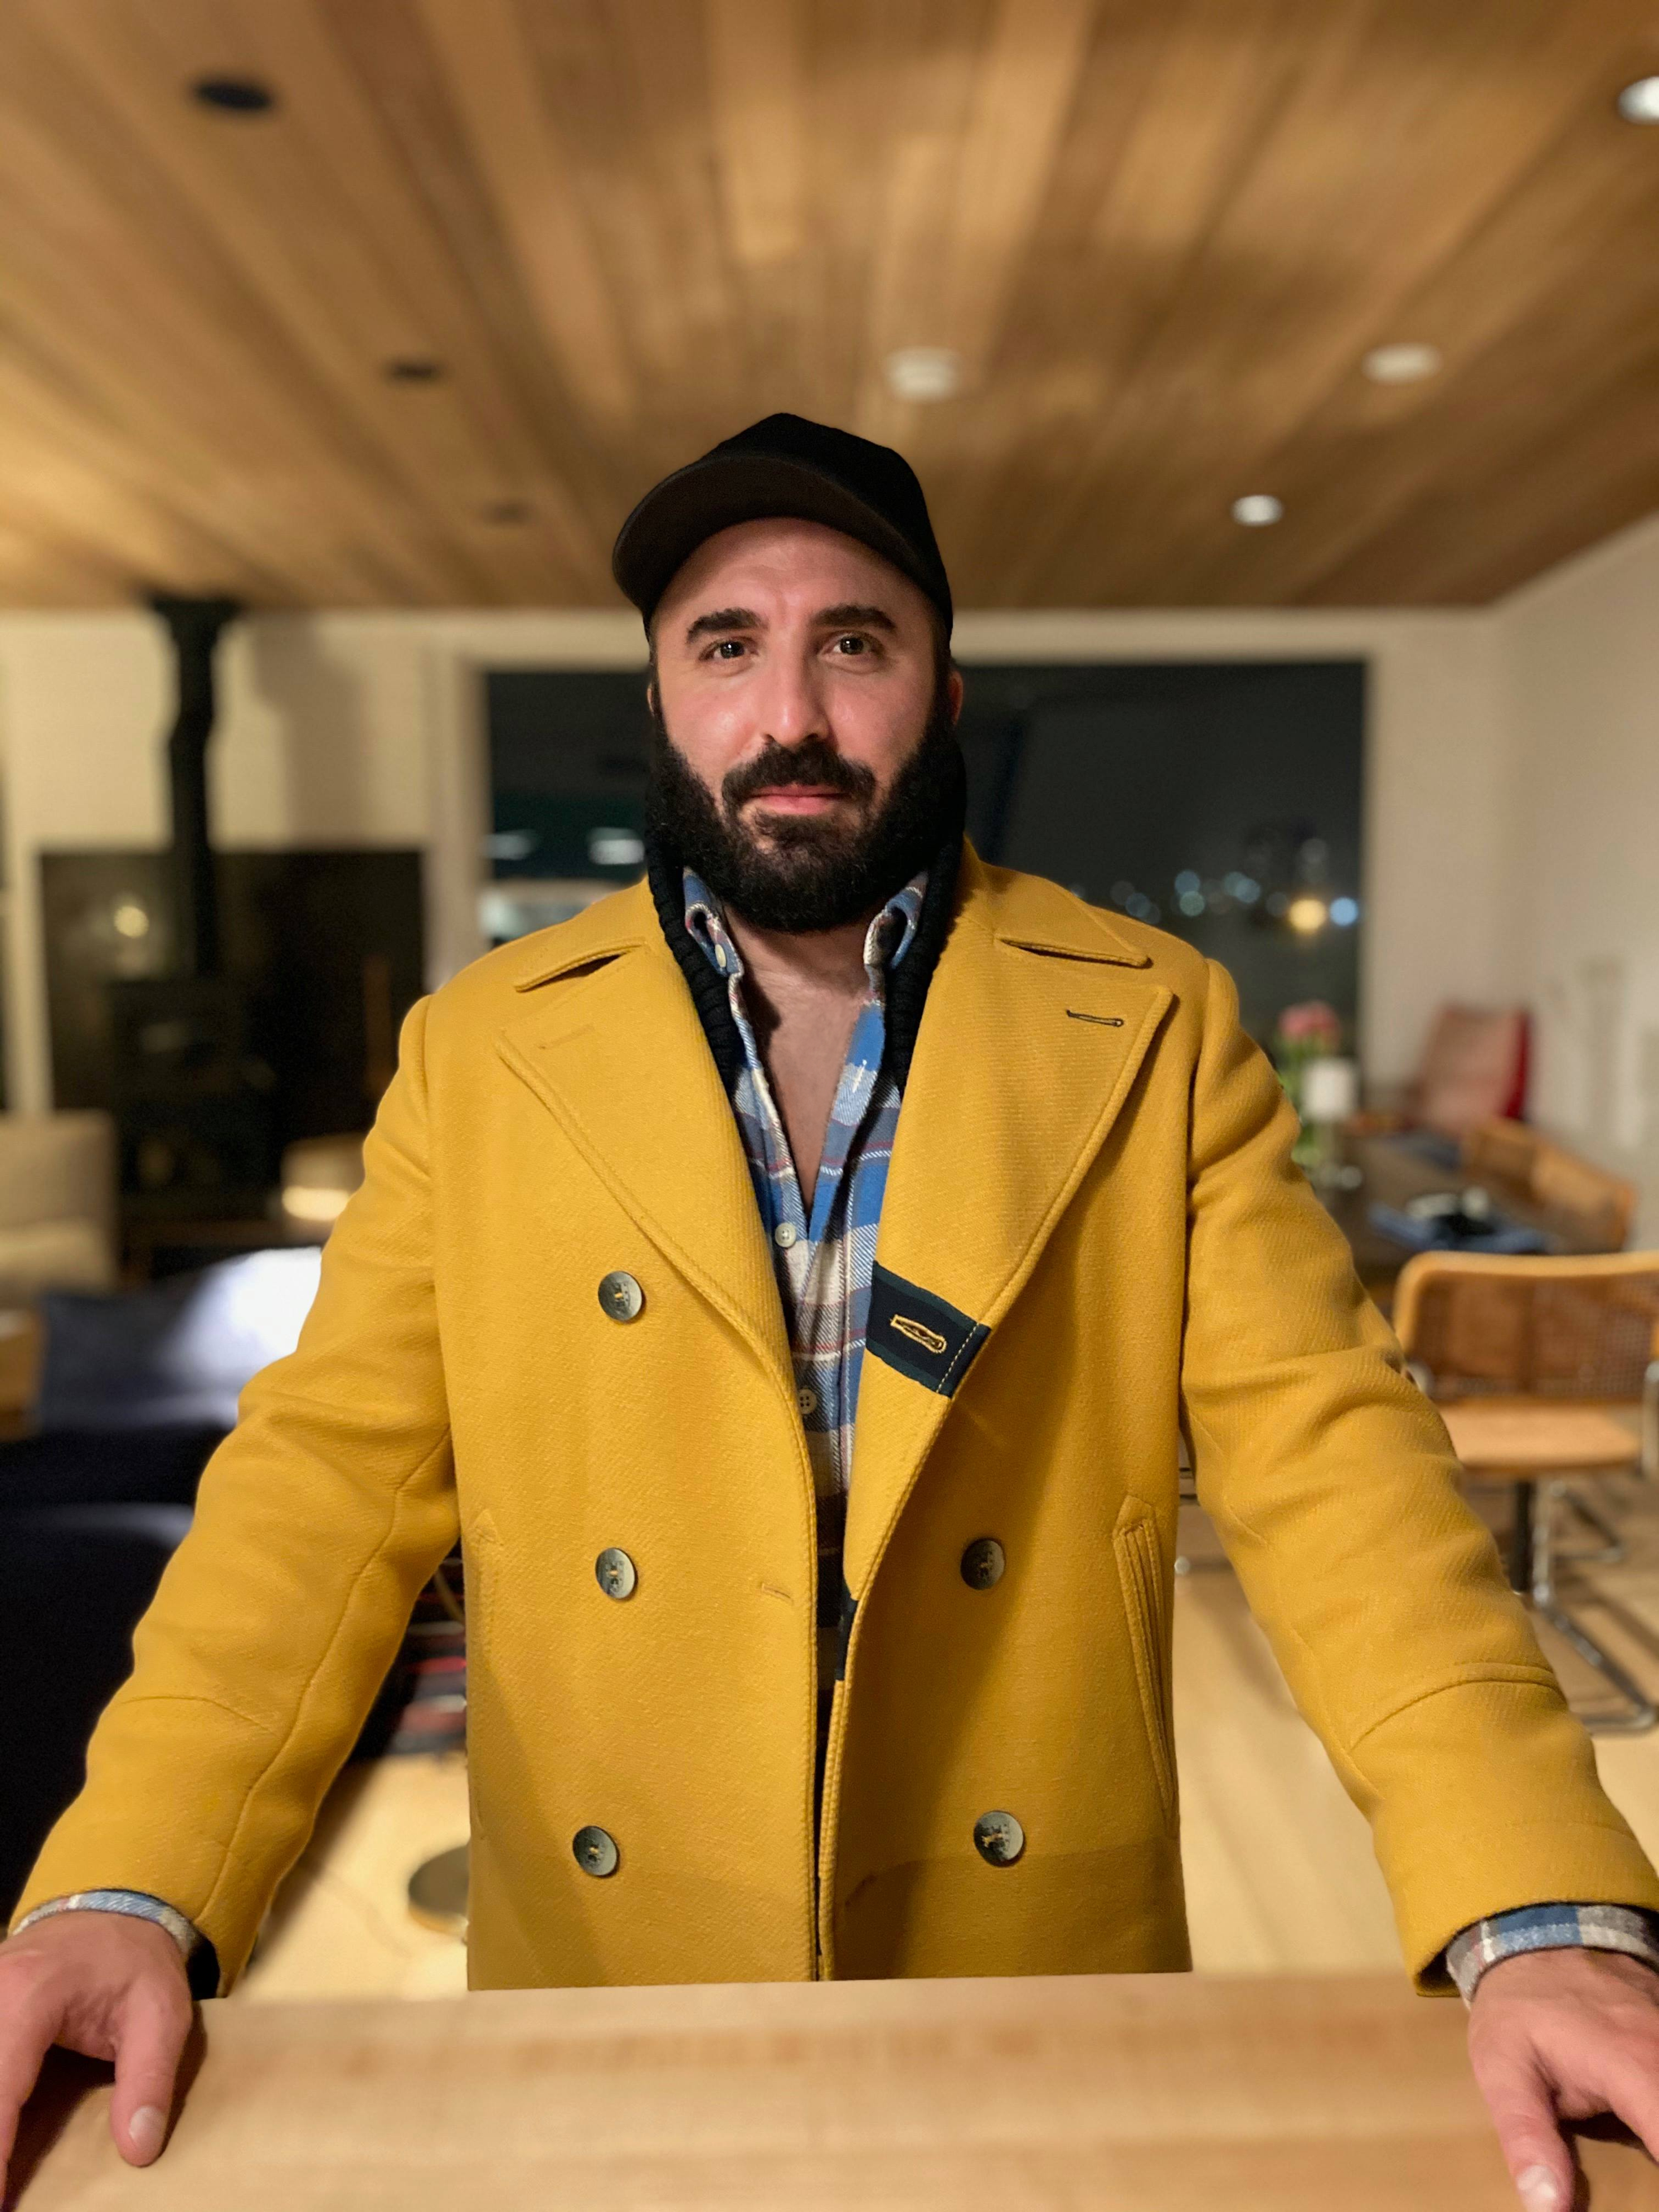 Photograph of Chris wearing a yellow coat.